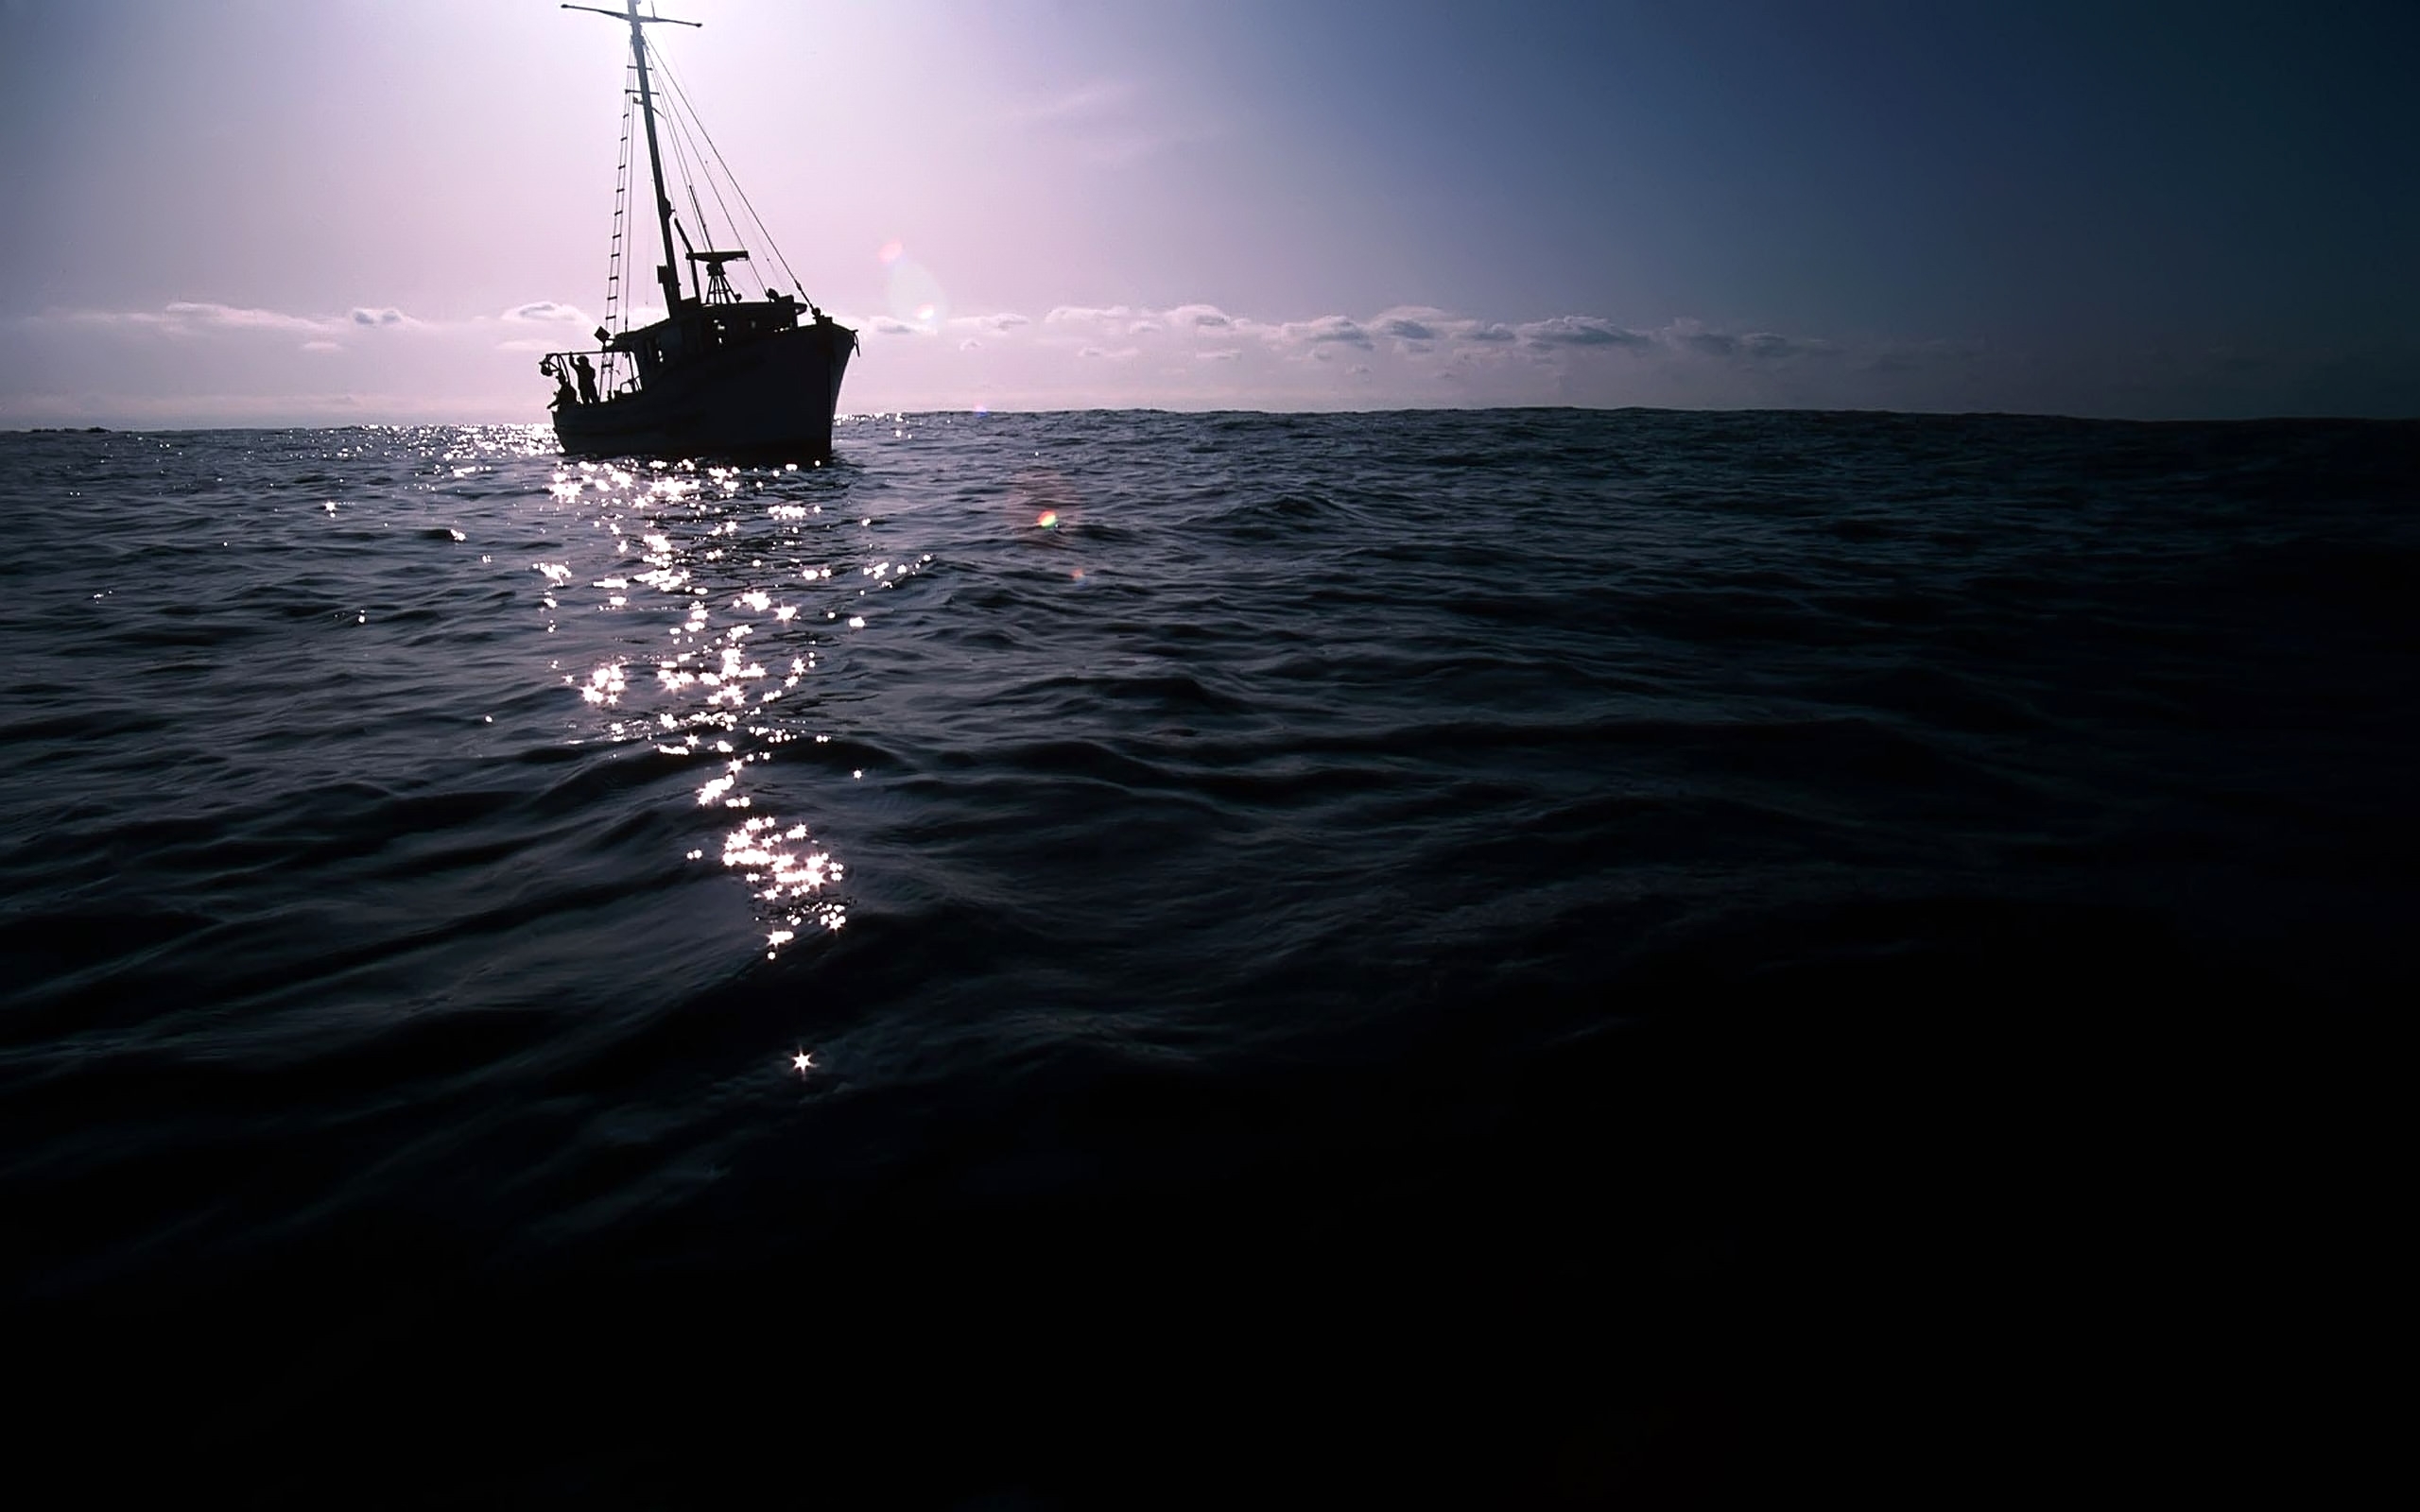 Корабль в океане одинокий. Корабль в океане. Лодка в море. Корабль на воде. Море фото.